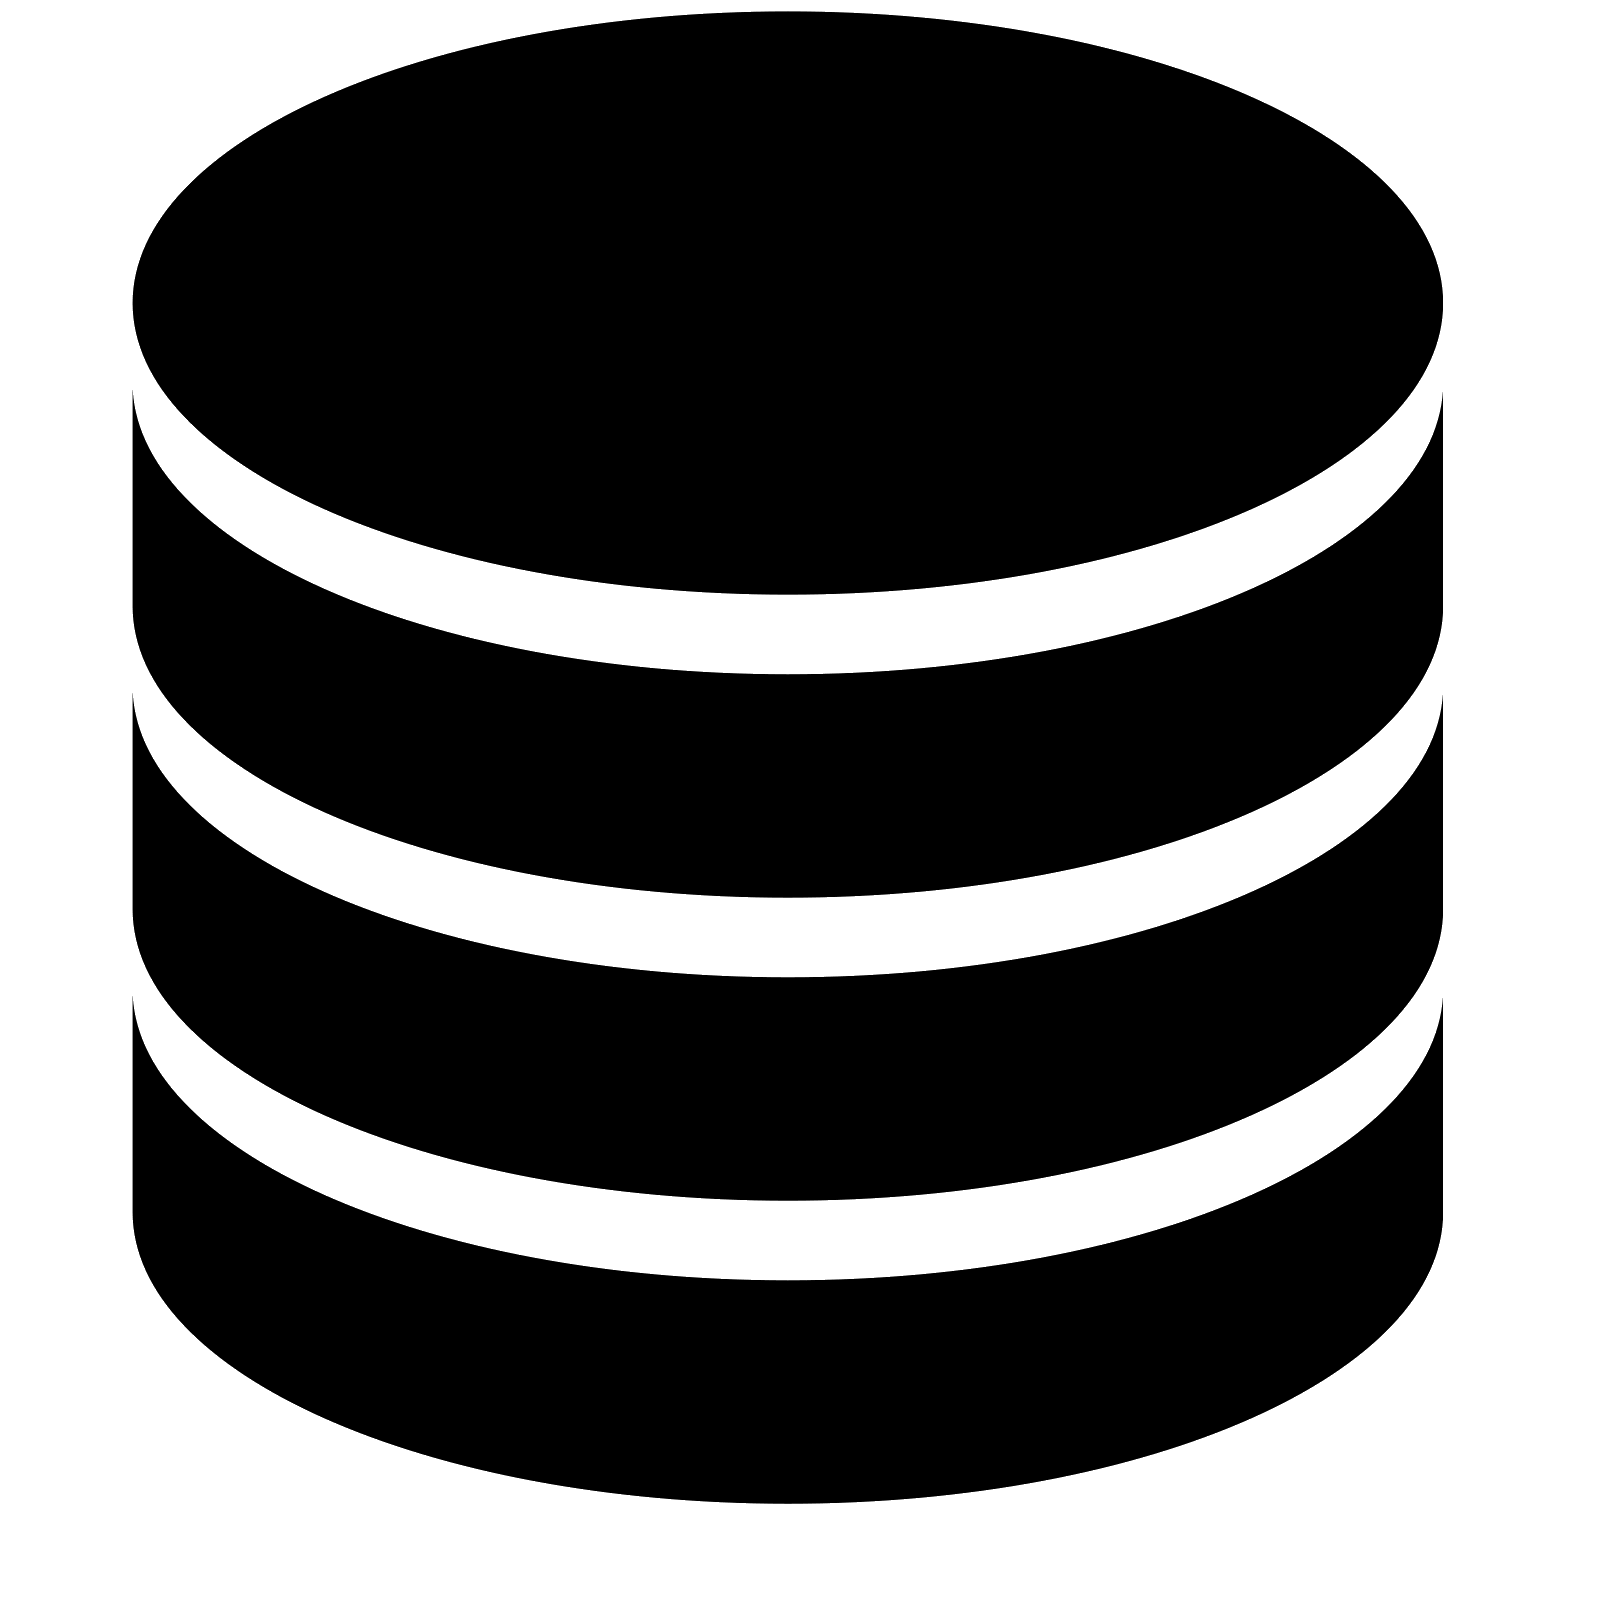 Database Logo - Database logo png PNG Image